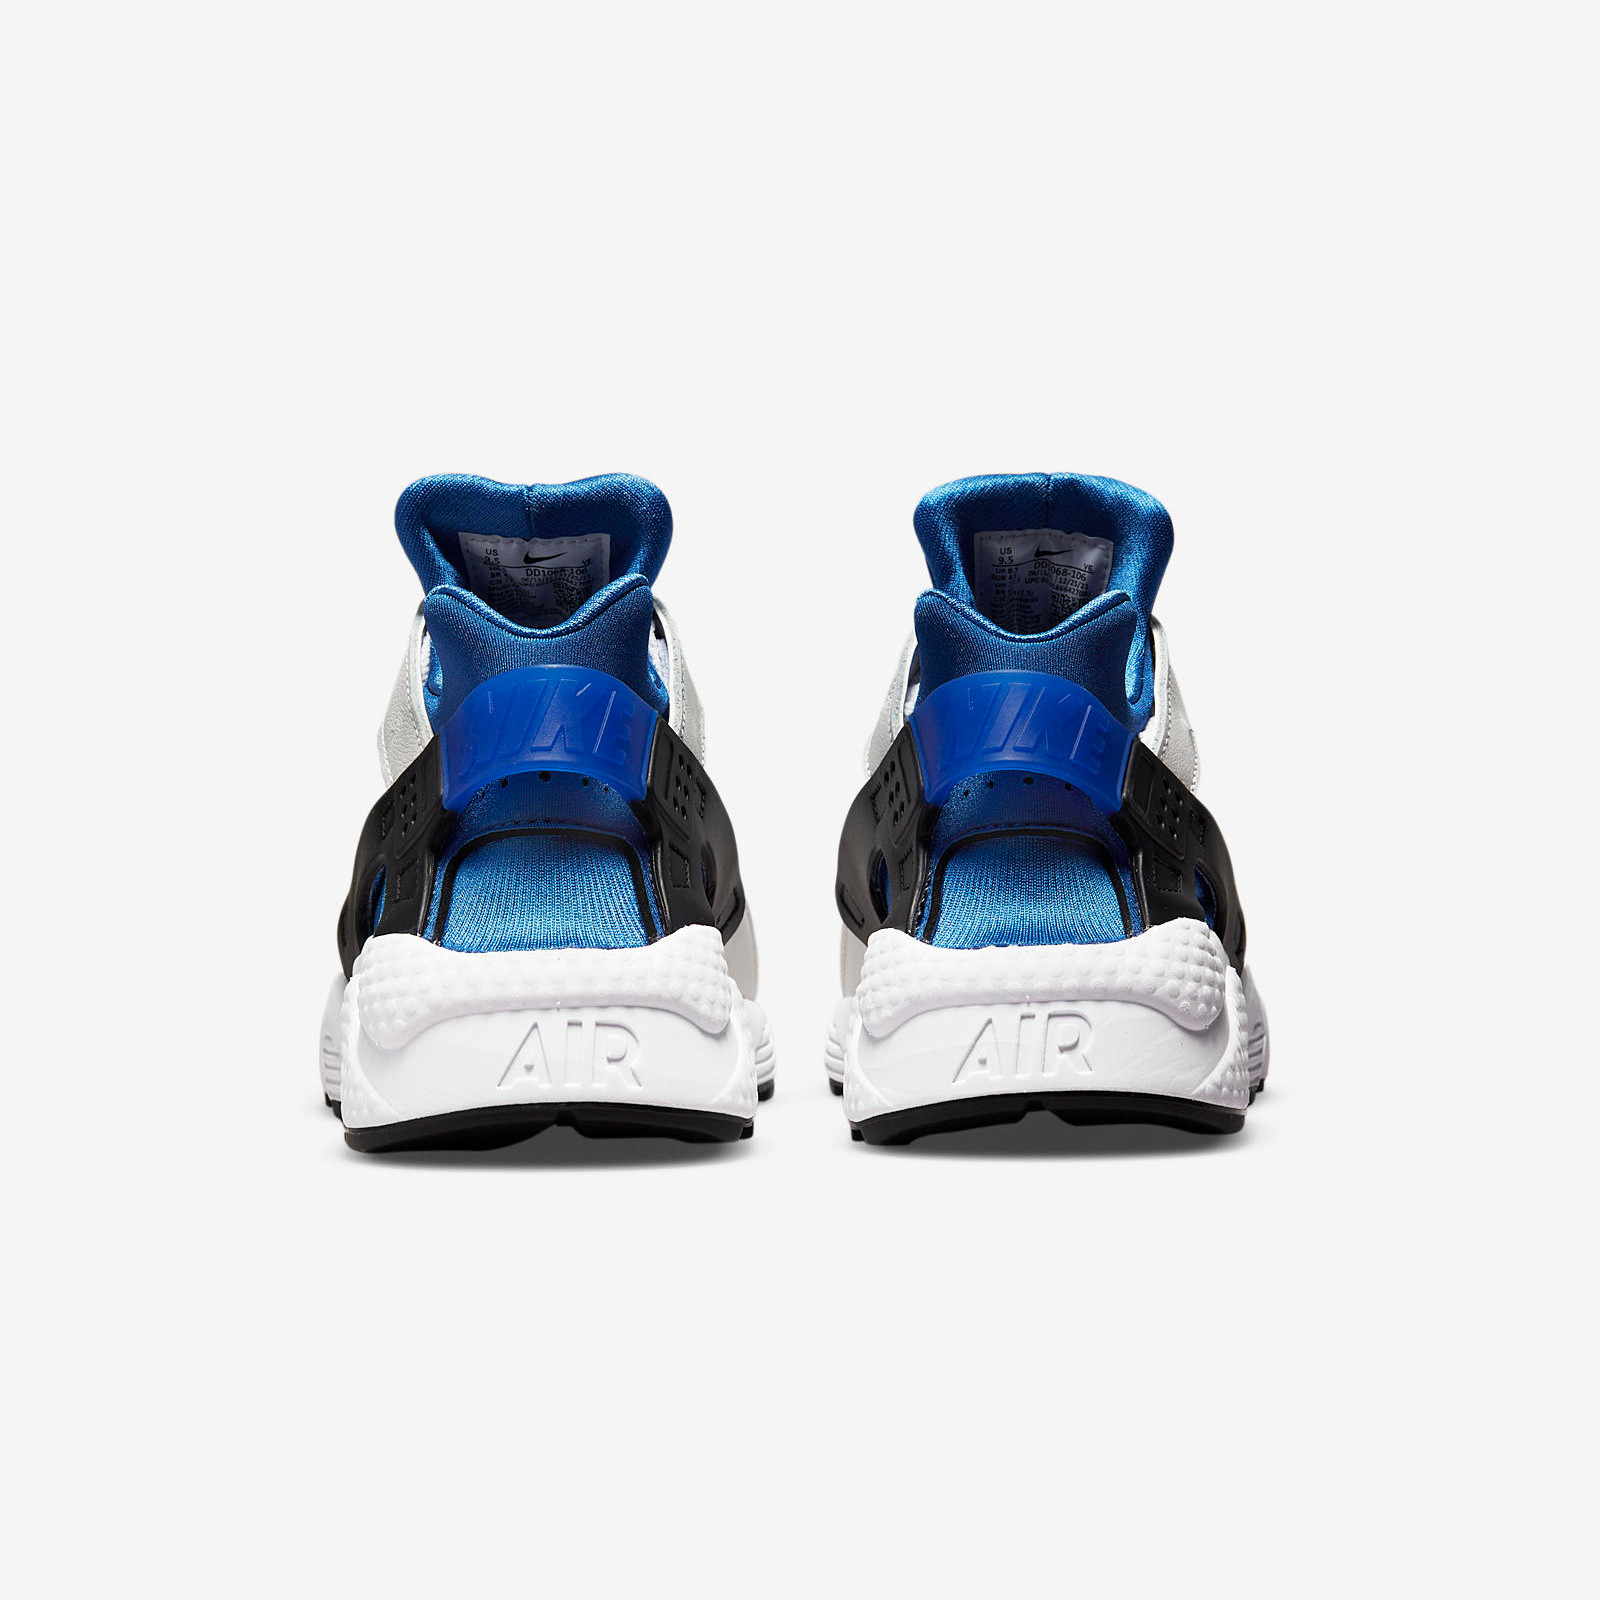 Nike Air Huarache
White / Metro Blue